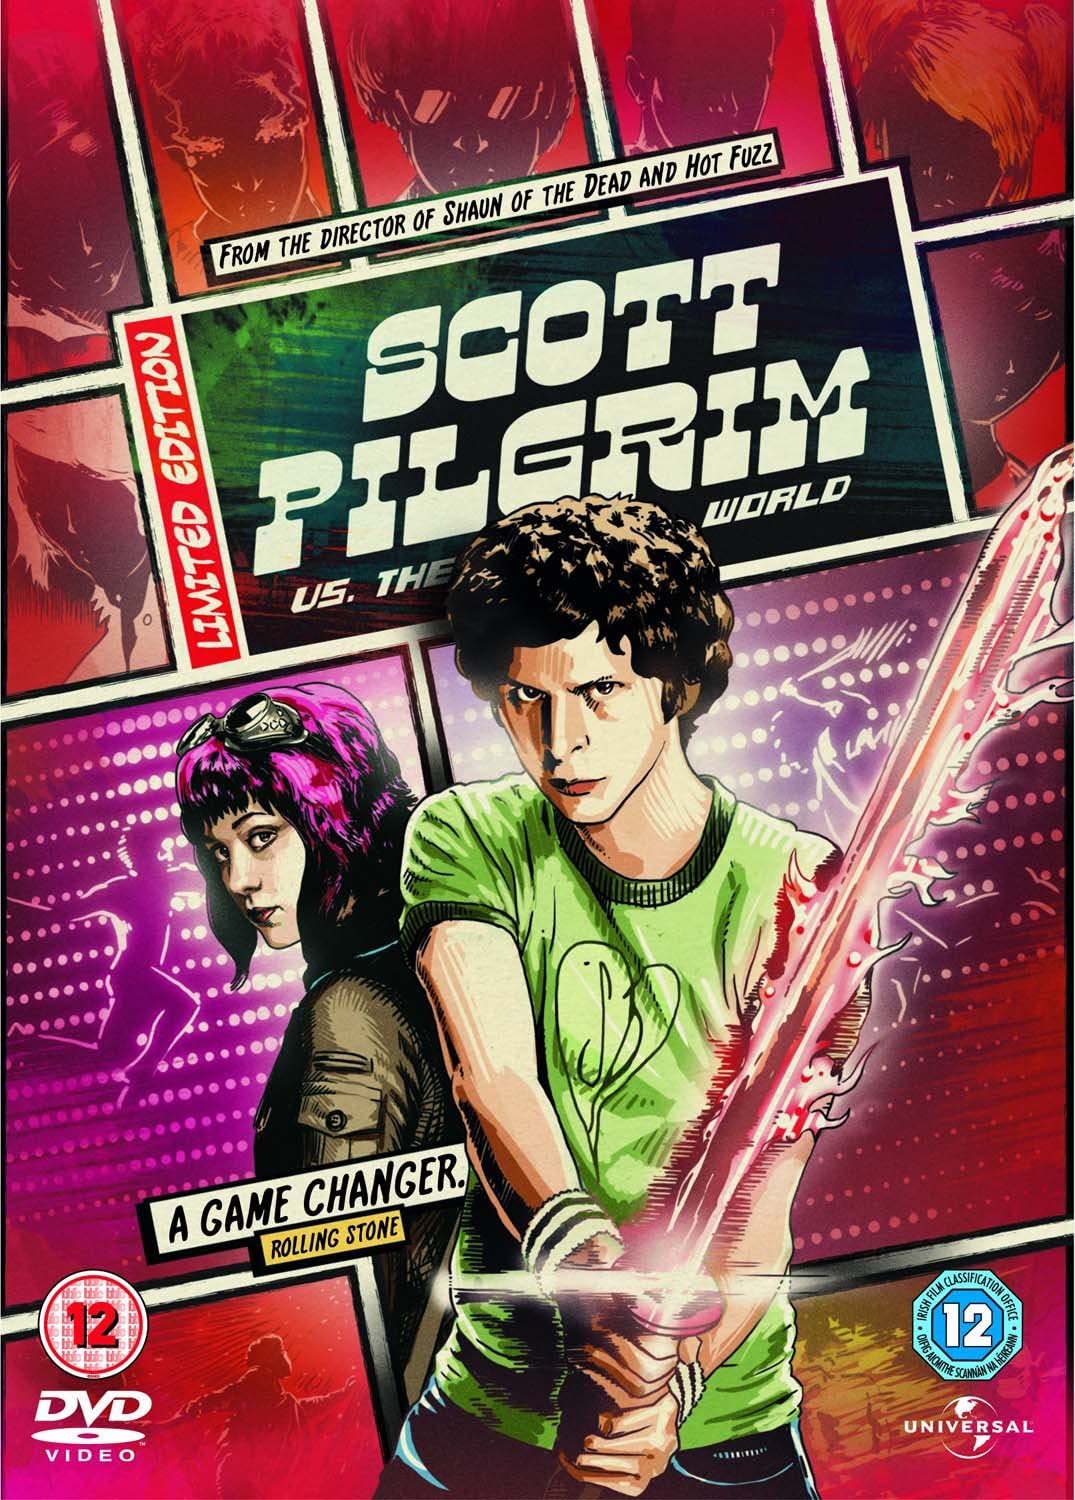 Reel Heroes: Scott Pilgrim - Action/Romance [DVD]